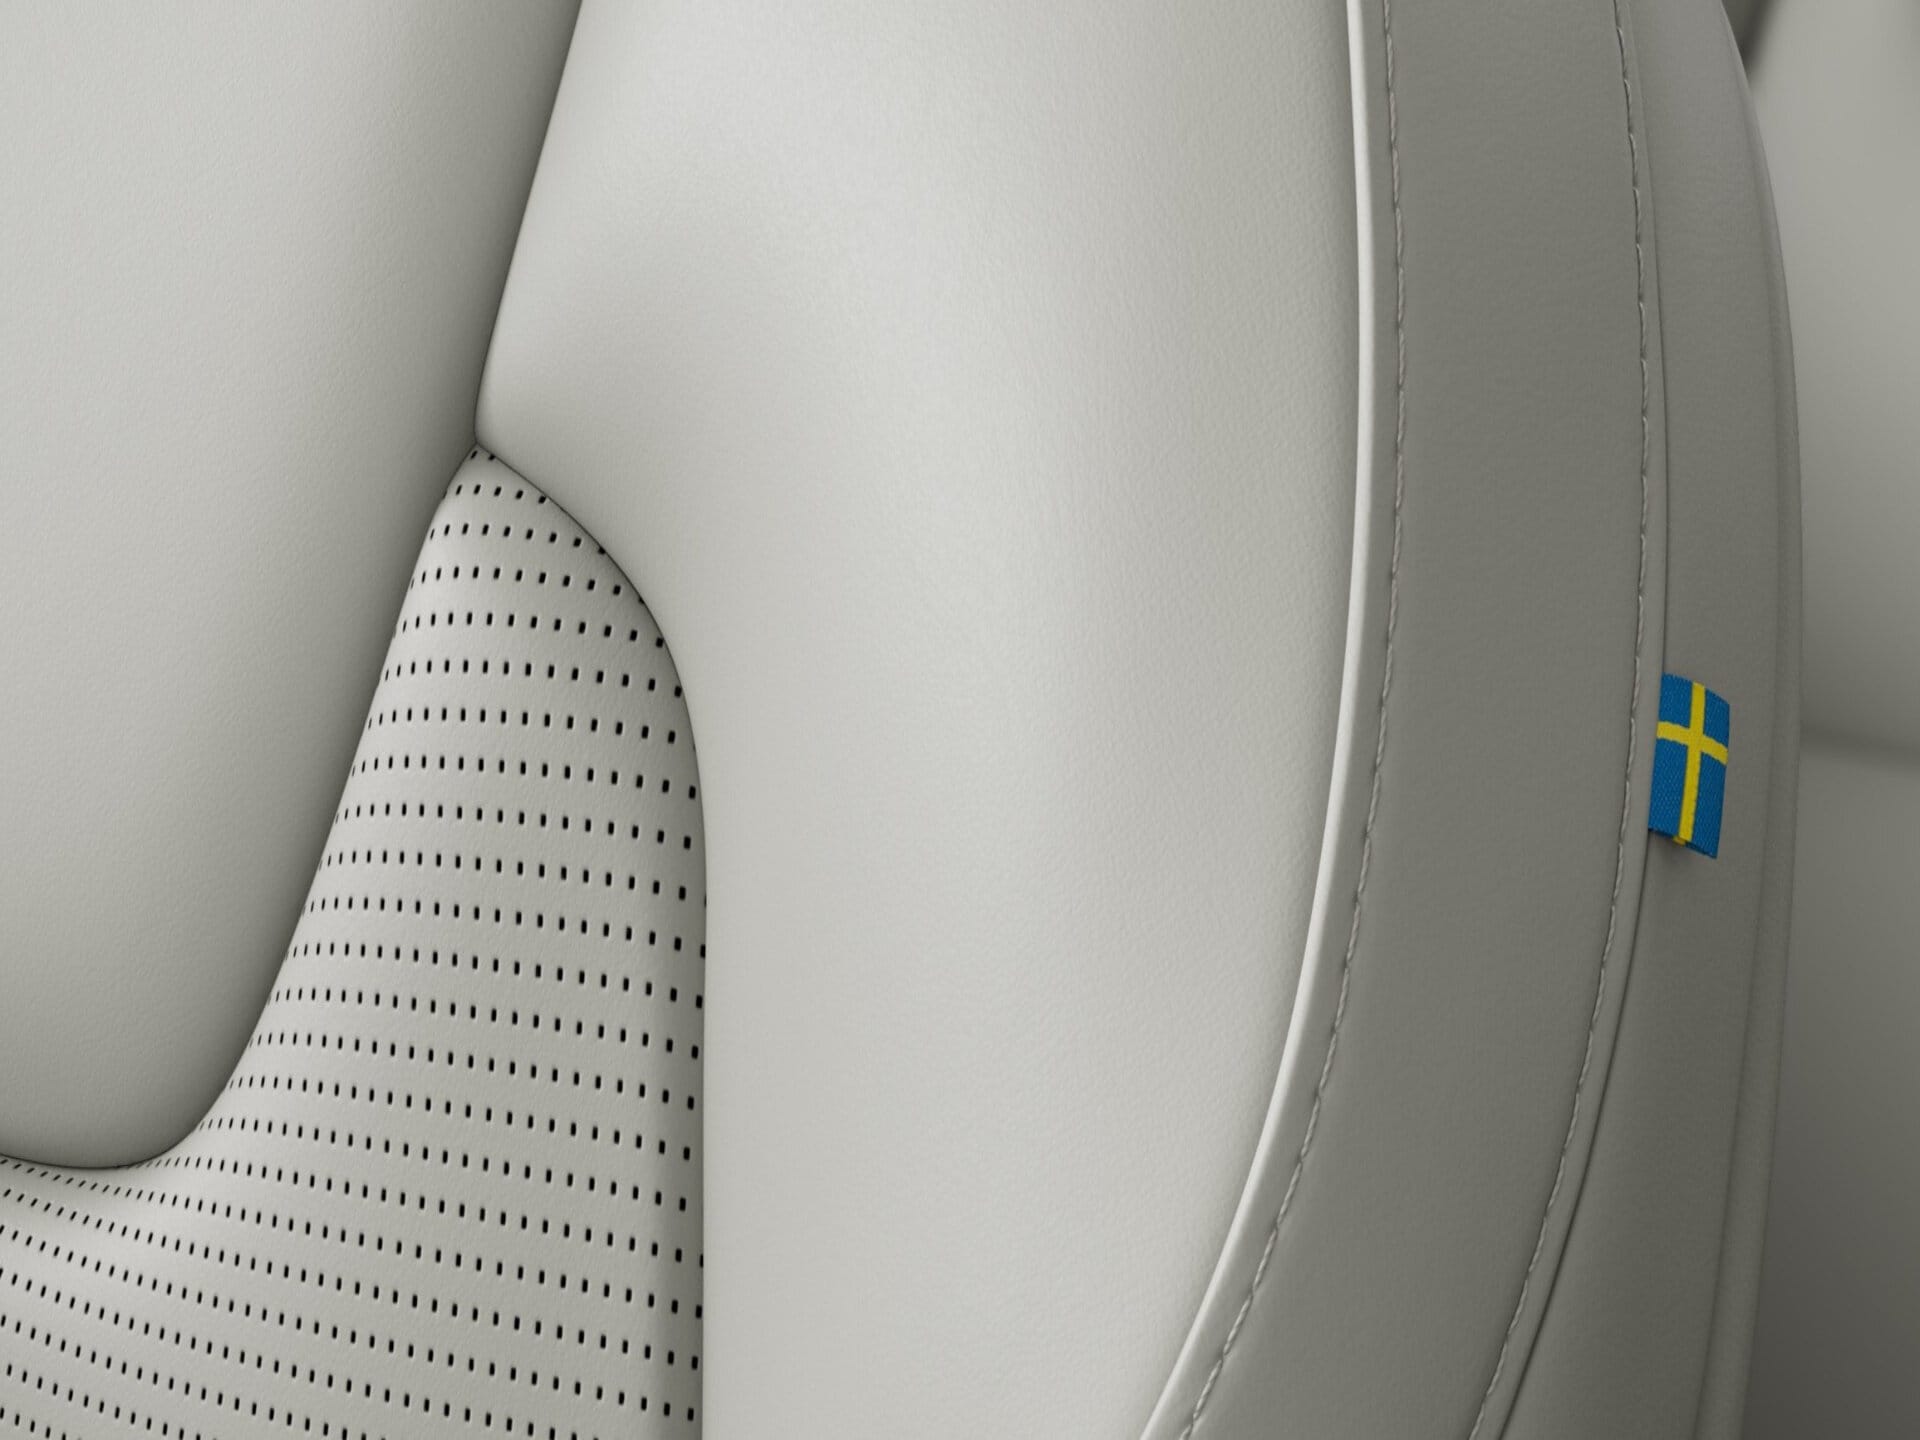 Volvo XC60 Recharge 量身訂製的無皮革羊毛混紡座椅特寫。